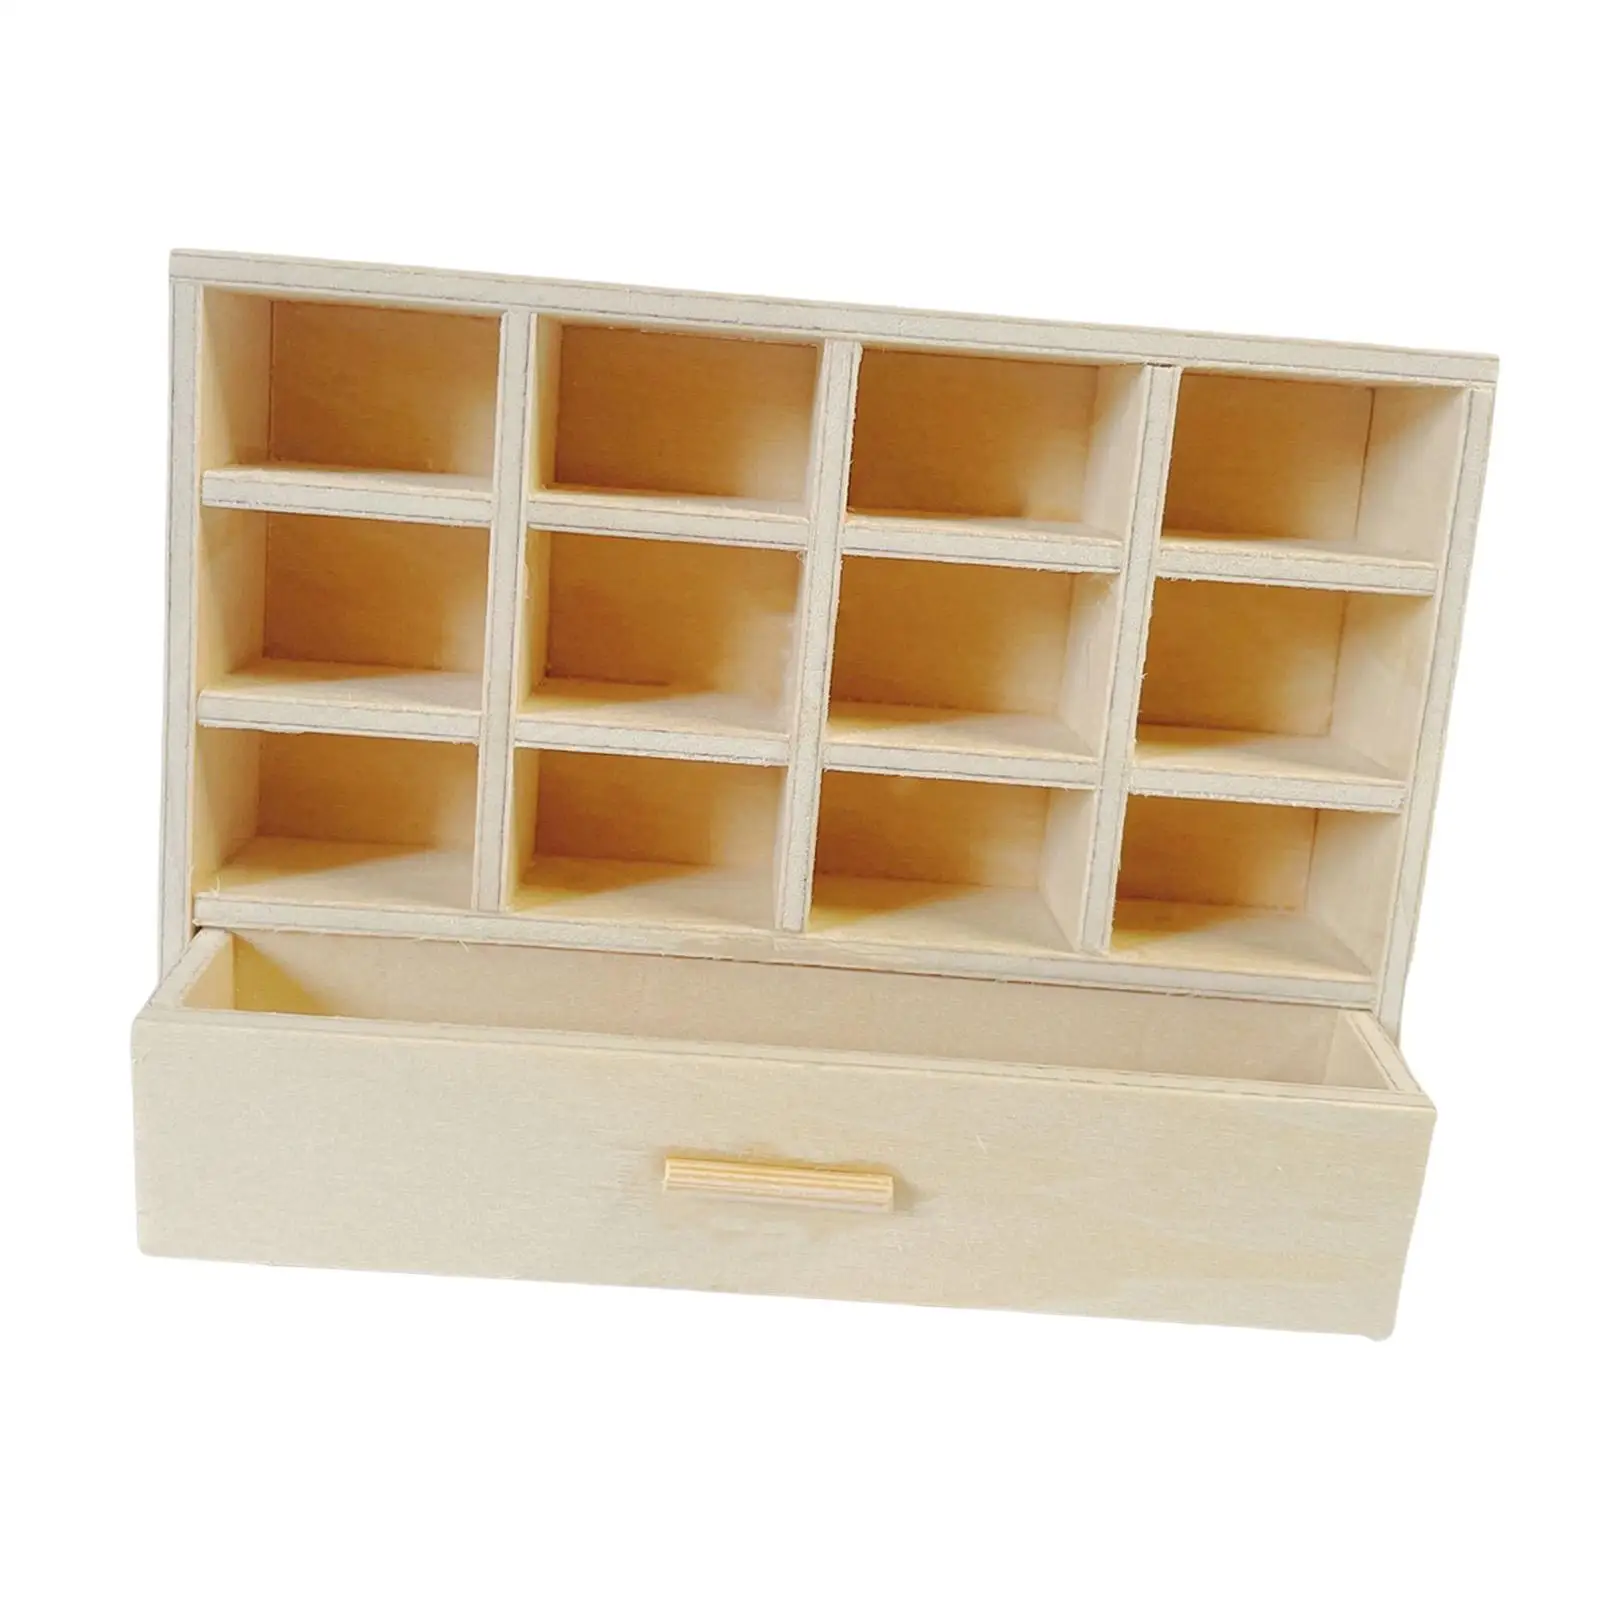 

Wooden 1:12 Dollhouse Miniature Model Bookshelf Home Accessories Toy Pretend Play Scenery Supplies Display Shelf Rack Decor